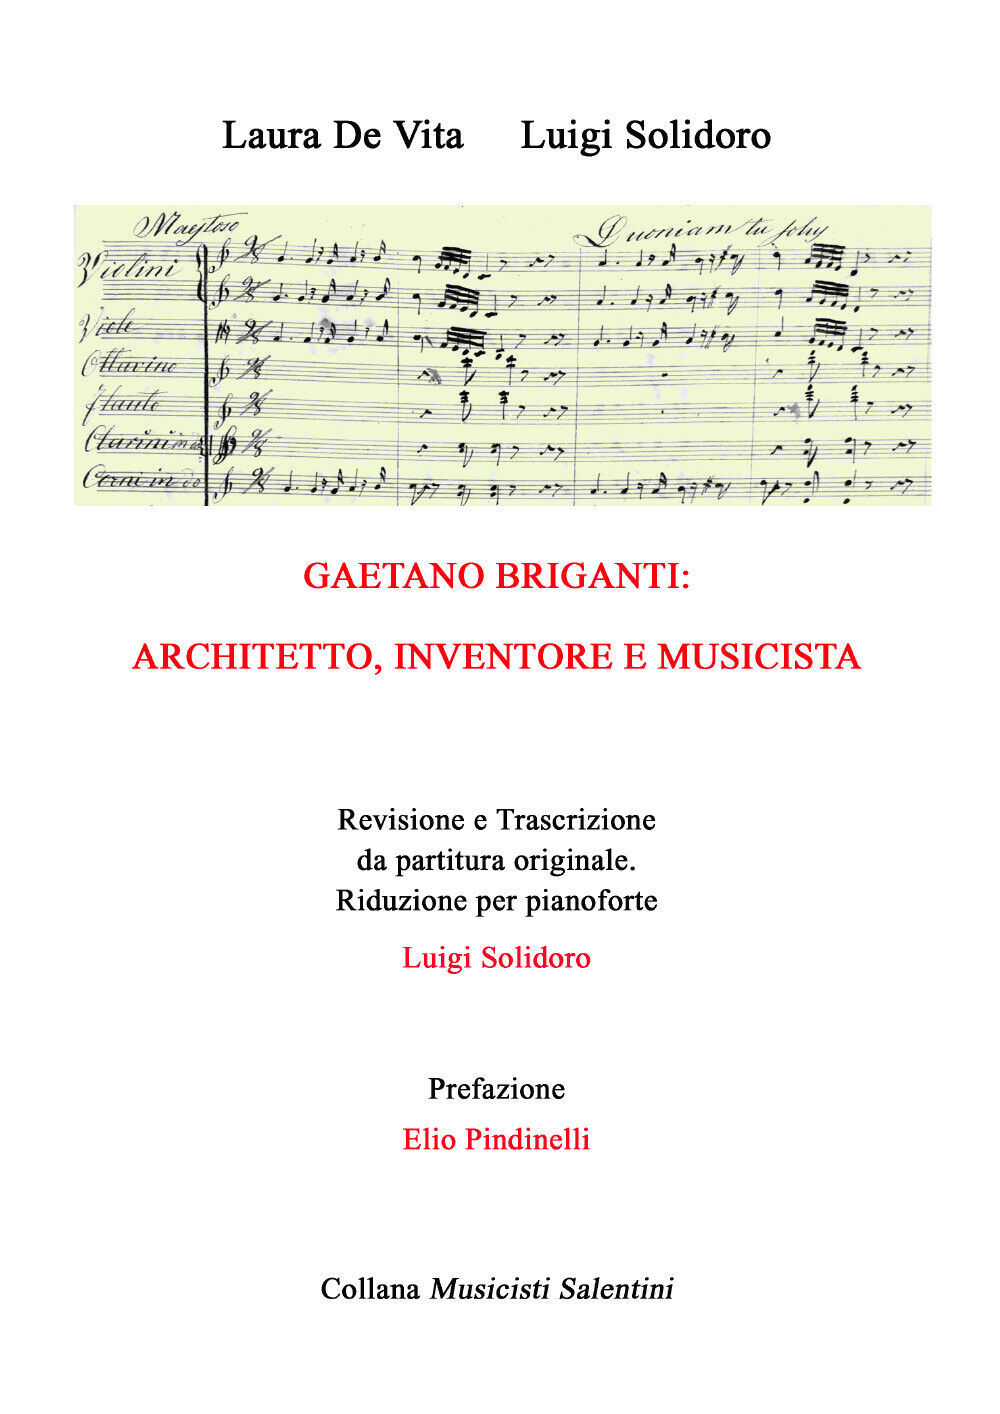 Gaetano Briganti: architetto, inventore, musicista di Laura De Vita, Luigi Solid